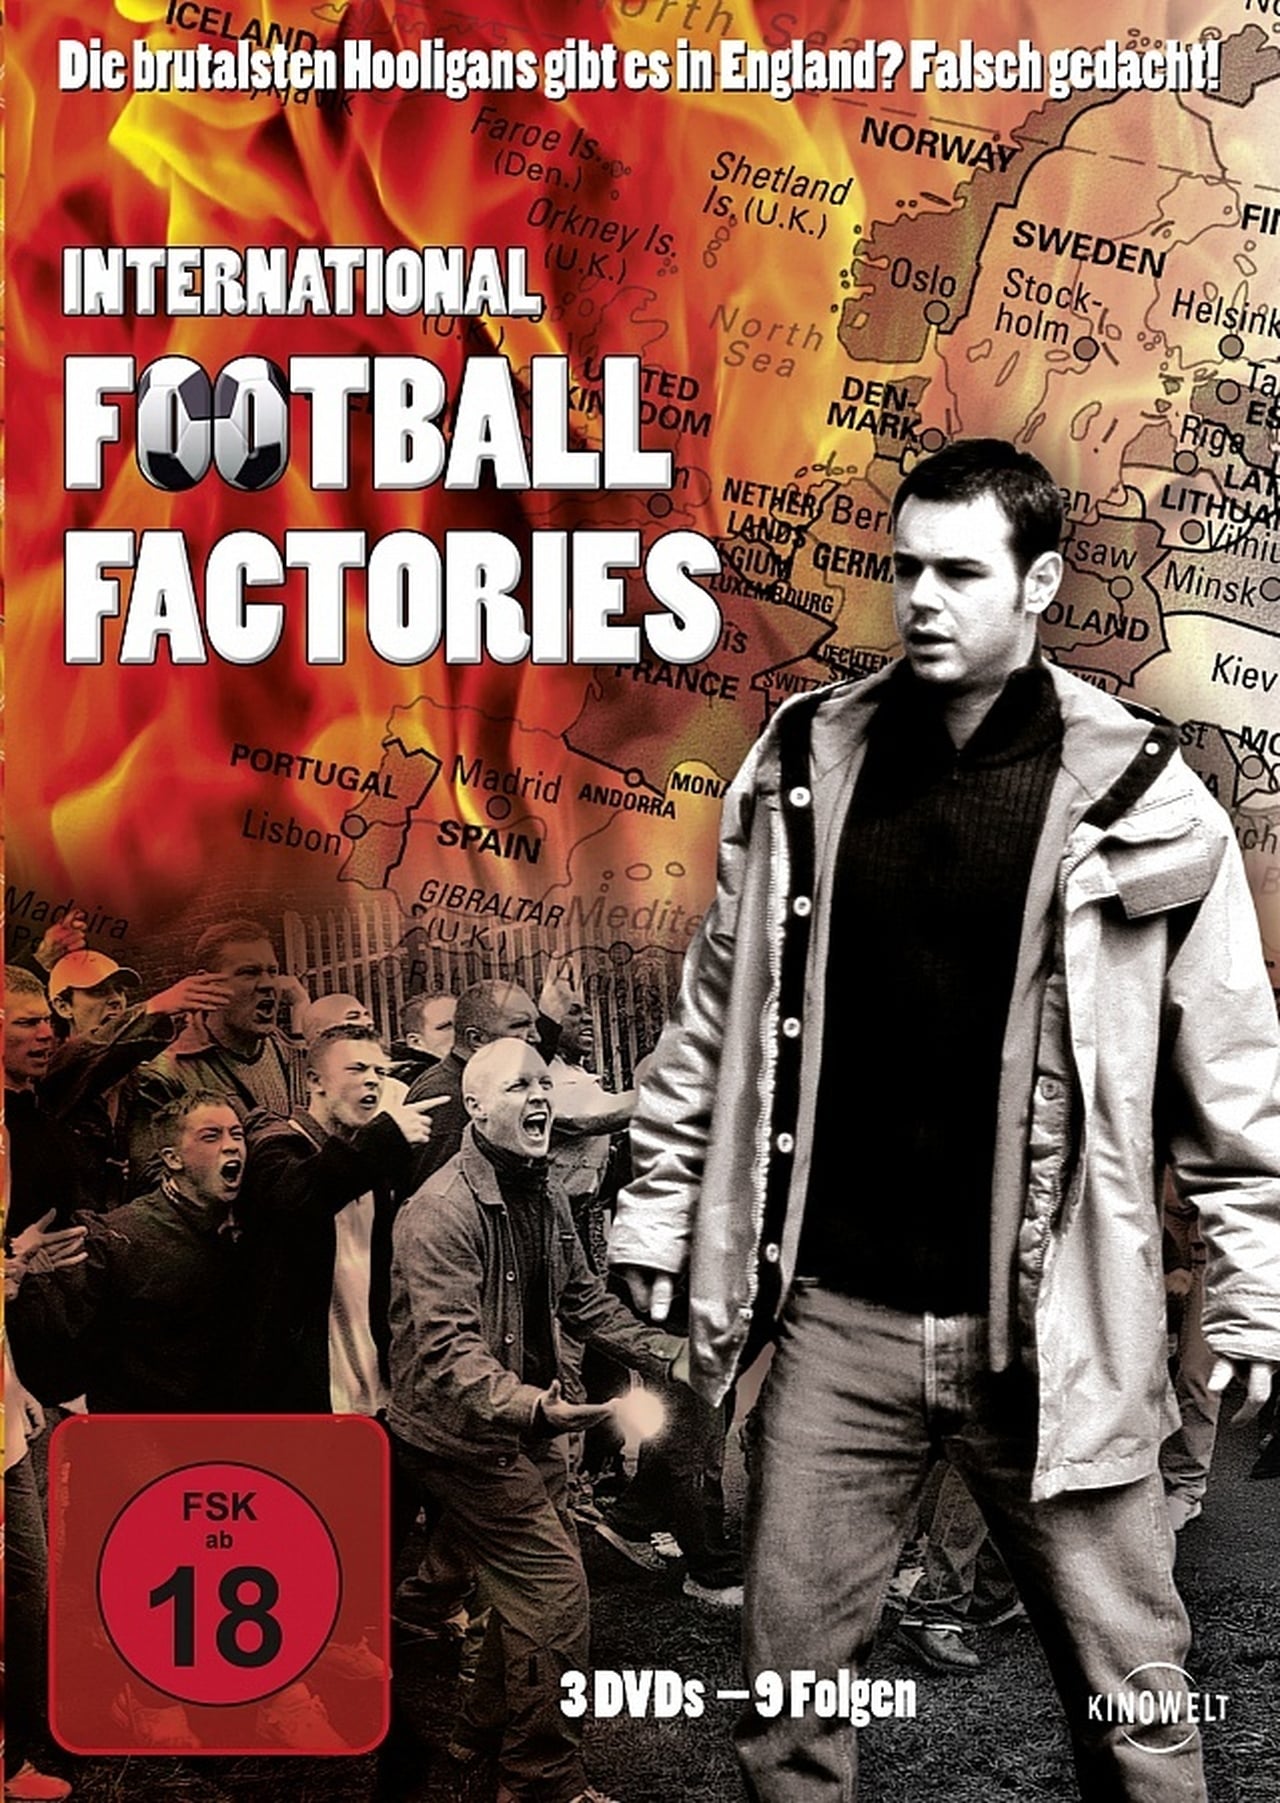 The Real Football Factories International Season 1